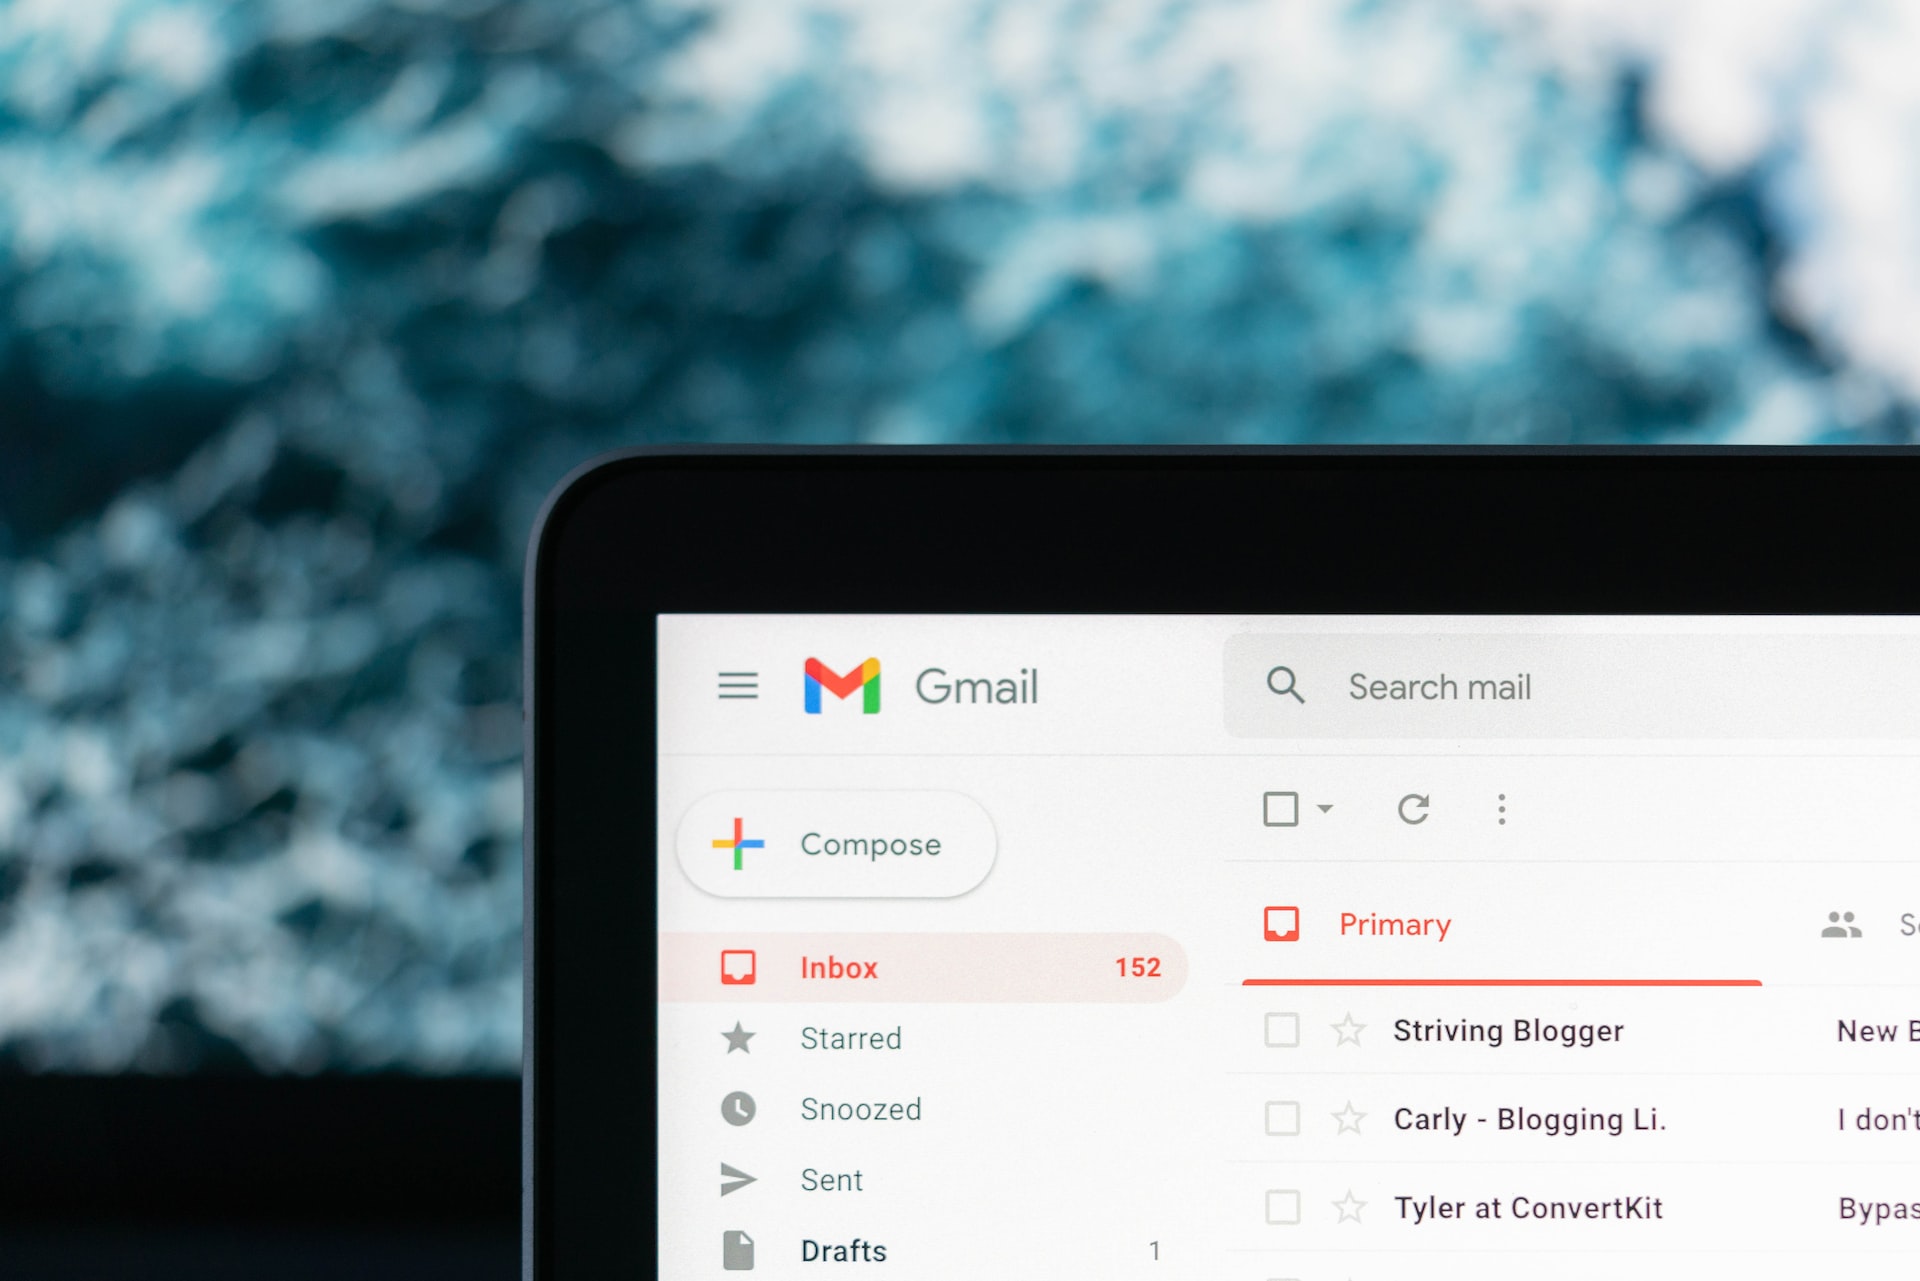 A computer screen showing a Gmail inbox